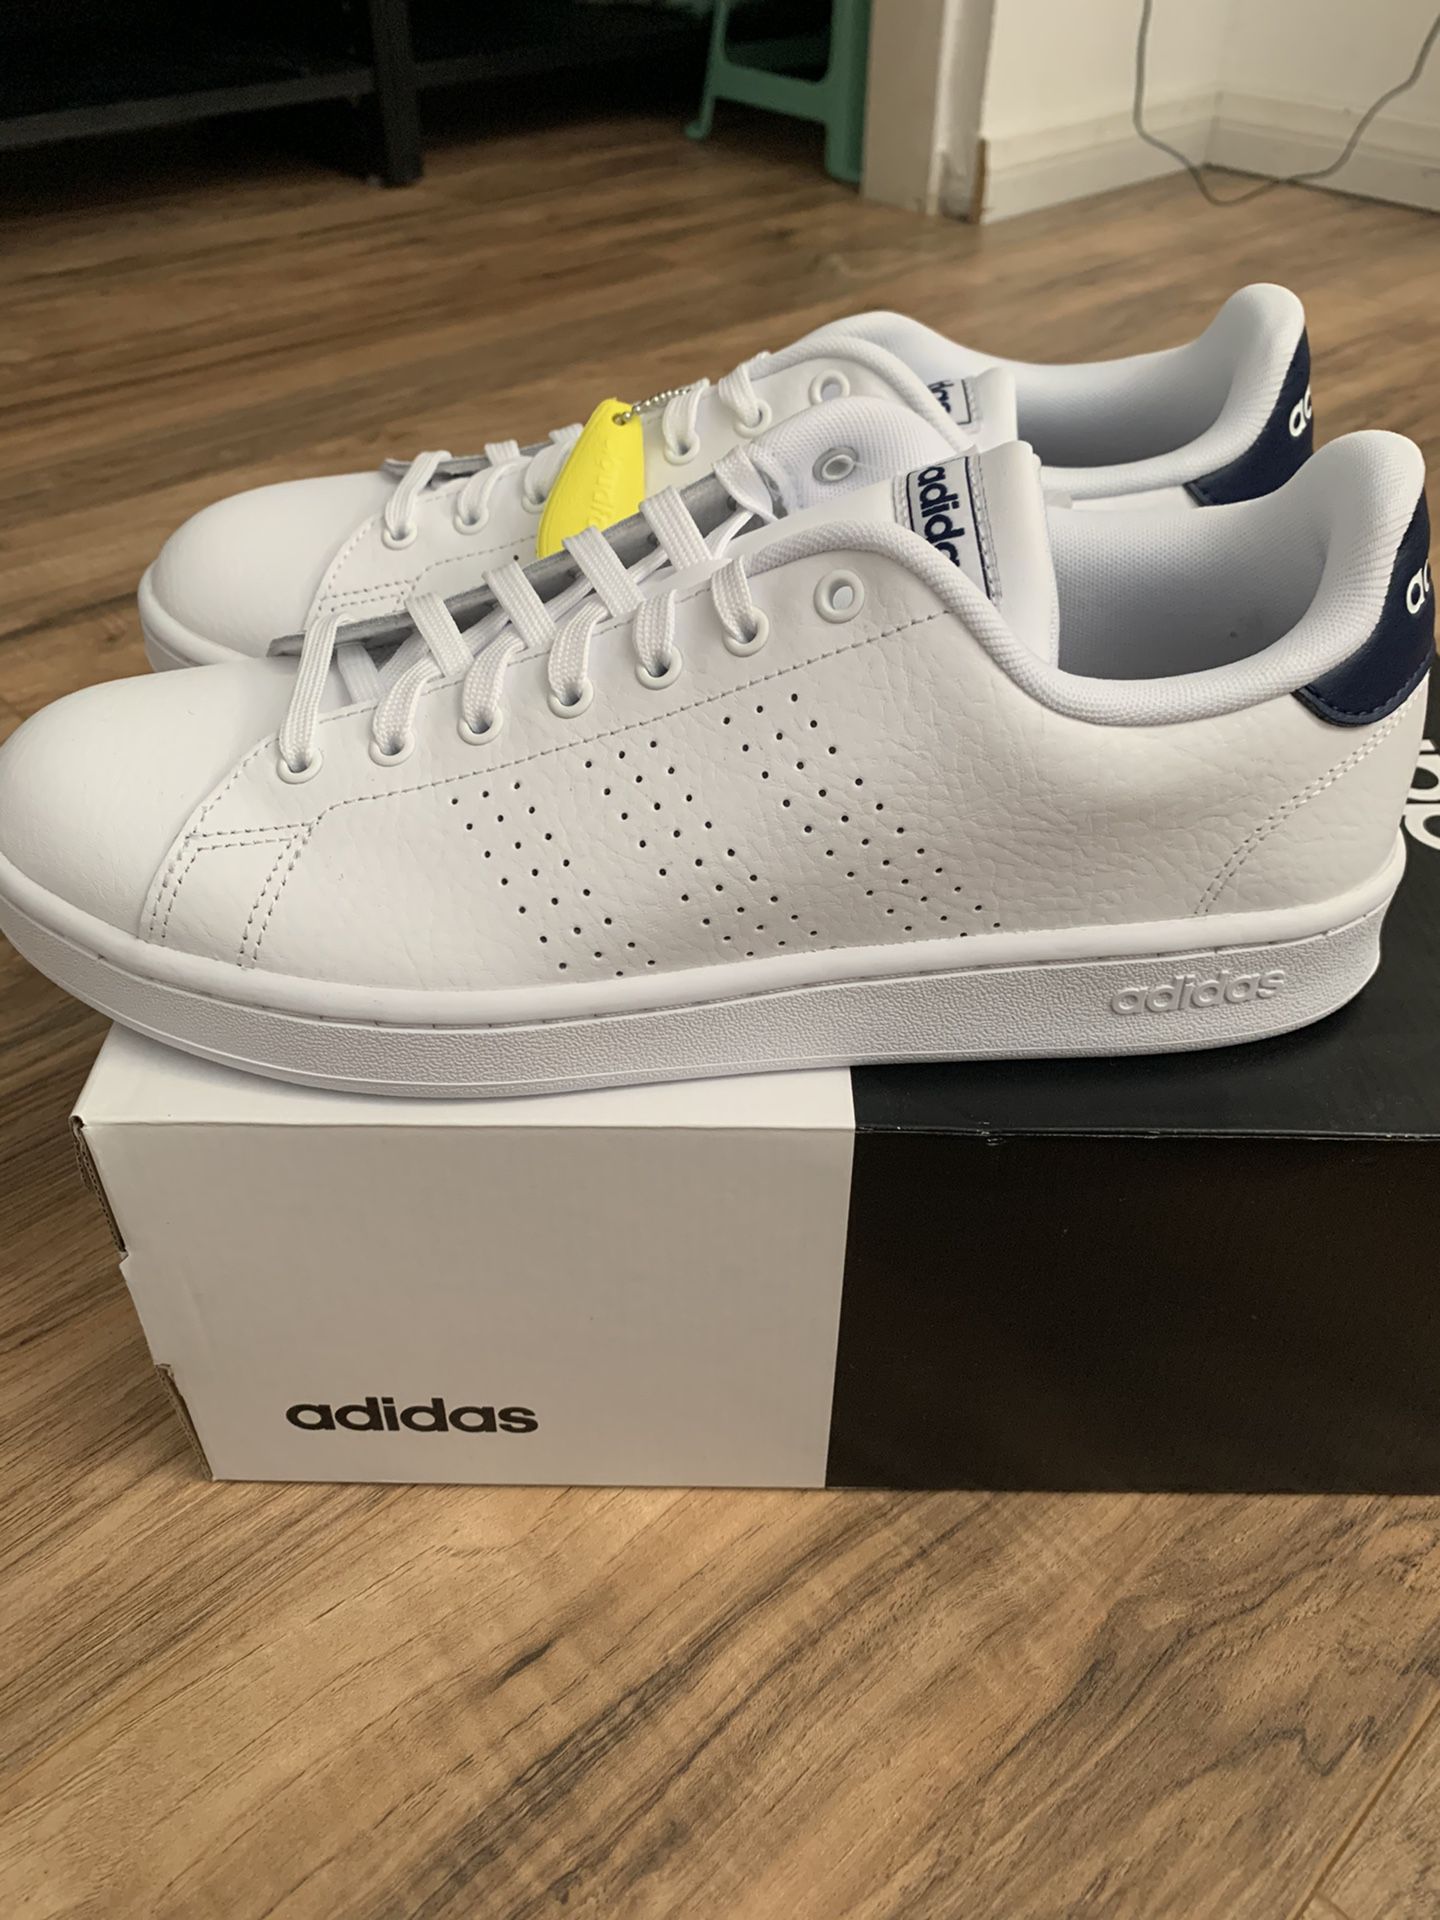 Adidas Men’s Shoes Sz 10 All White Brand New NWT